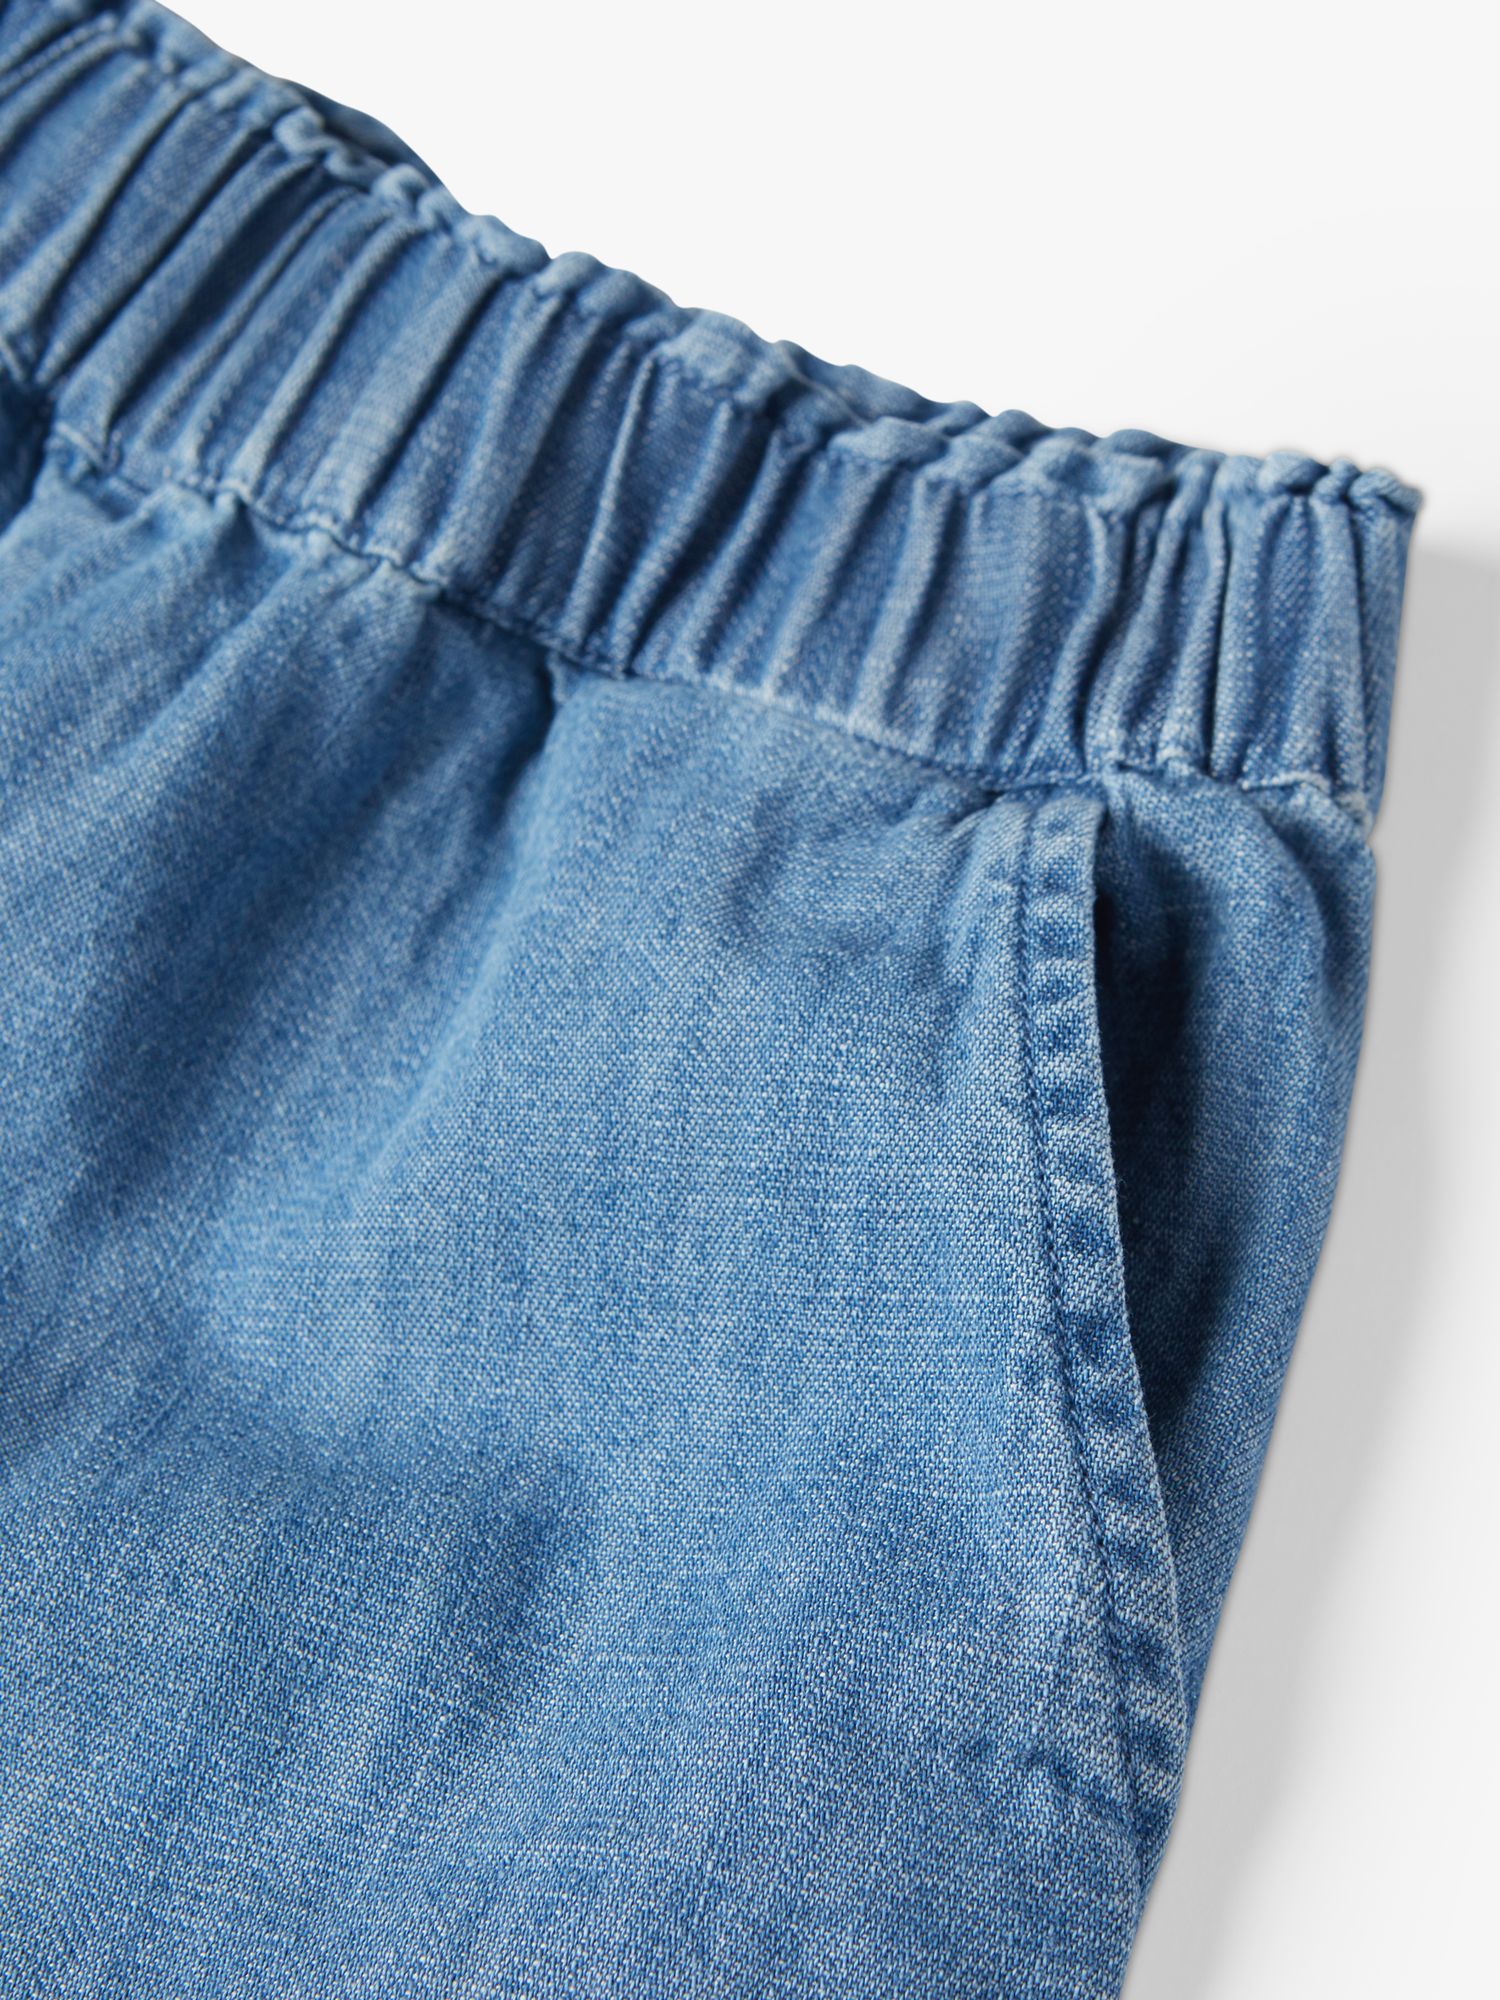 Polarn O. Pyret Kids' Organic Cotton Denim Chambray Pull On Shorts, Blue, 12-18 months